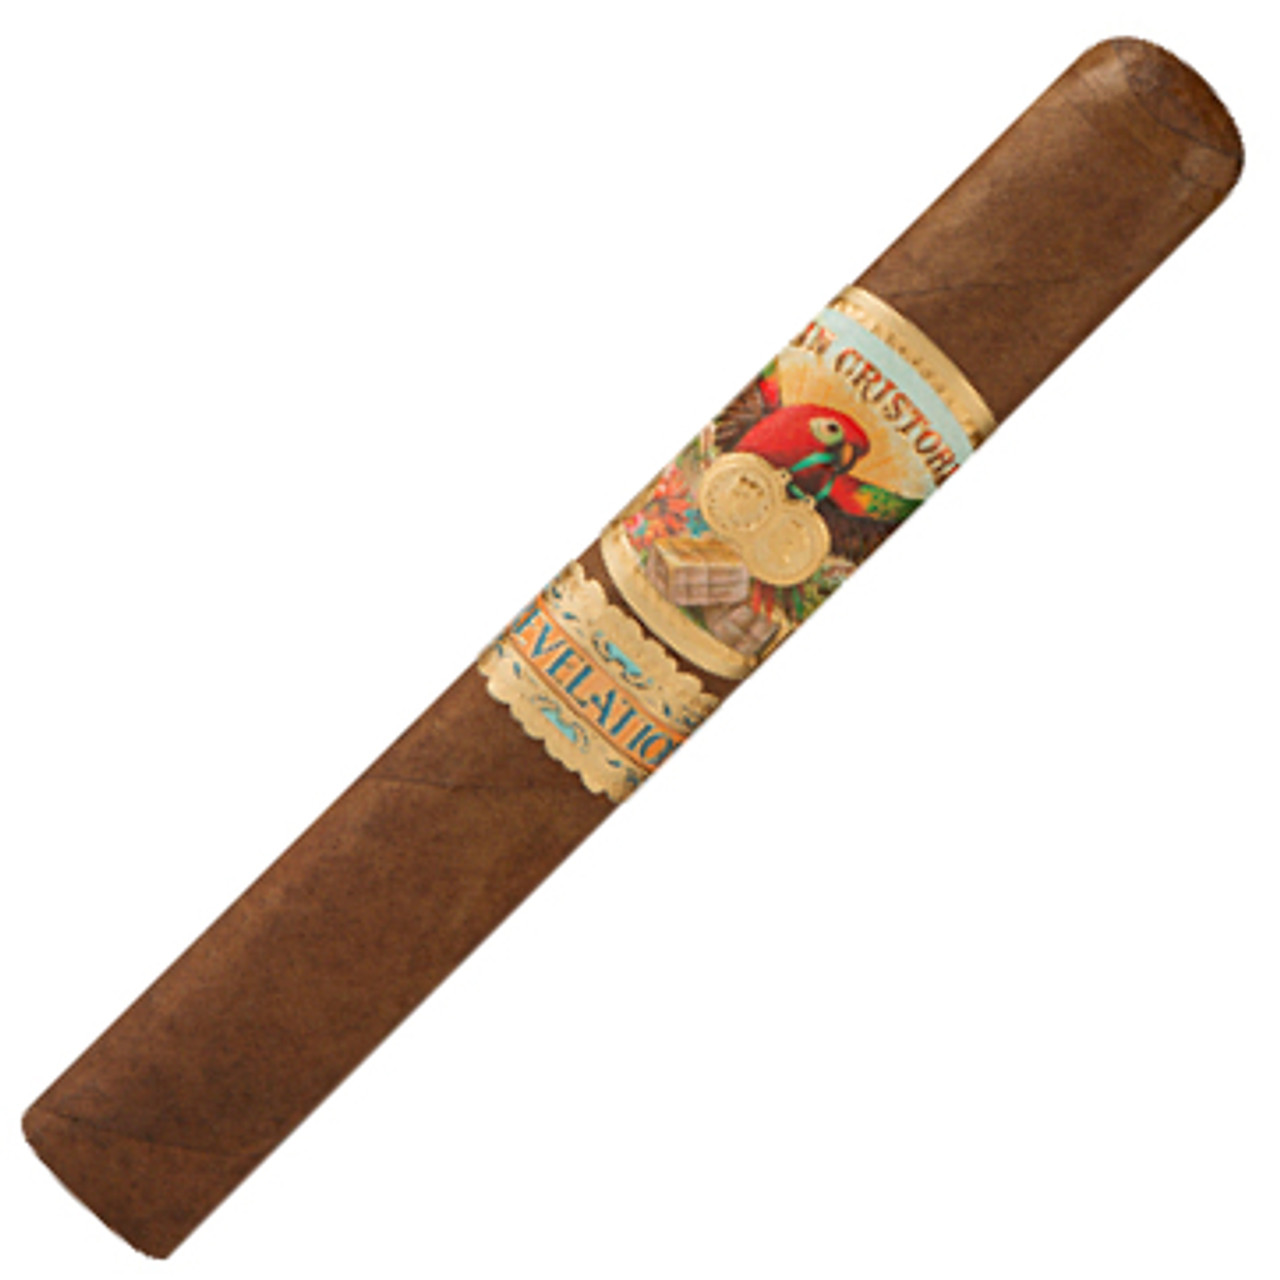 San Cristobal Revelation Legend Cigars - 6.25 x 52 (Box of 24)